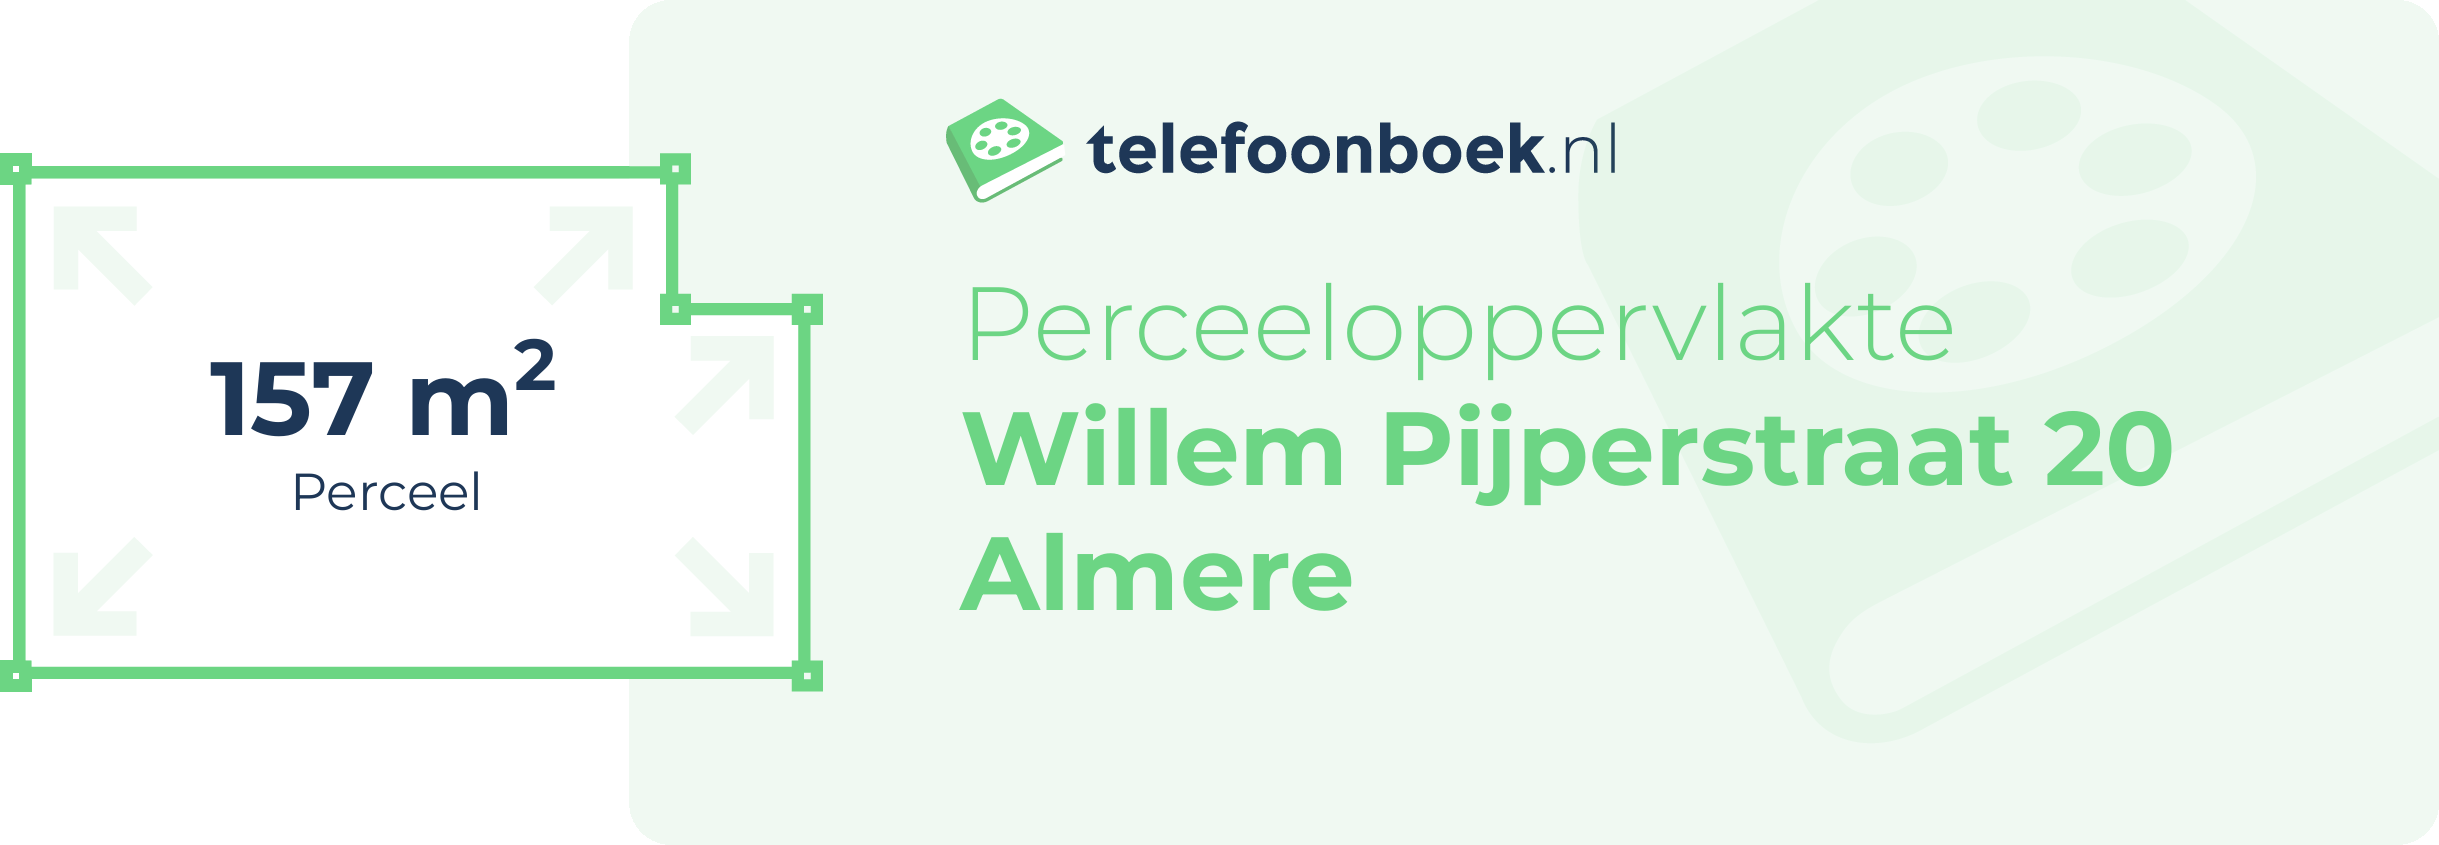 Perceeloppervlakte Willem Pijperstraat 20 Almere